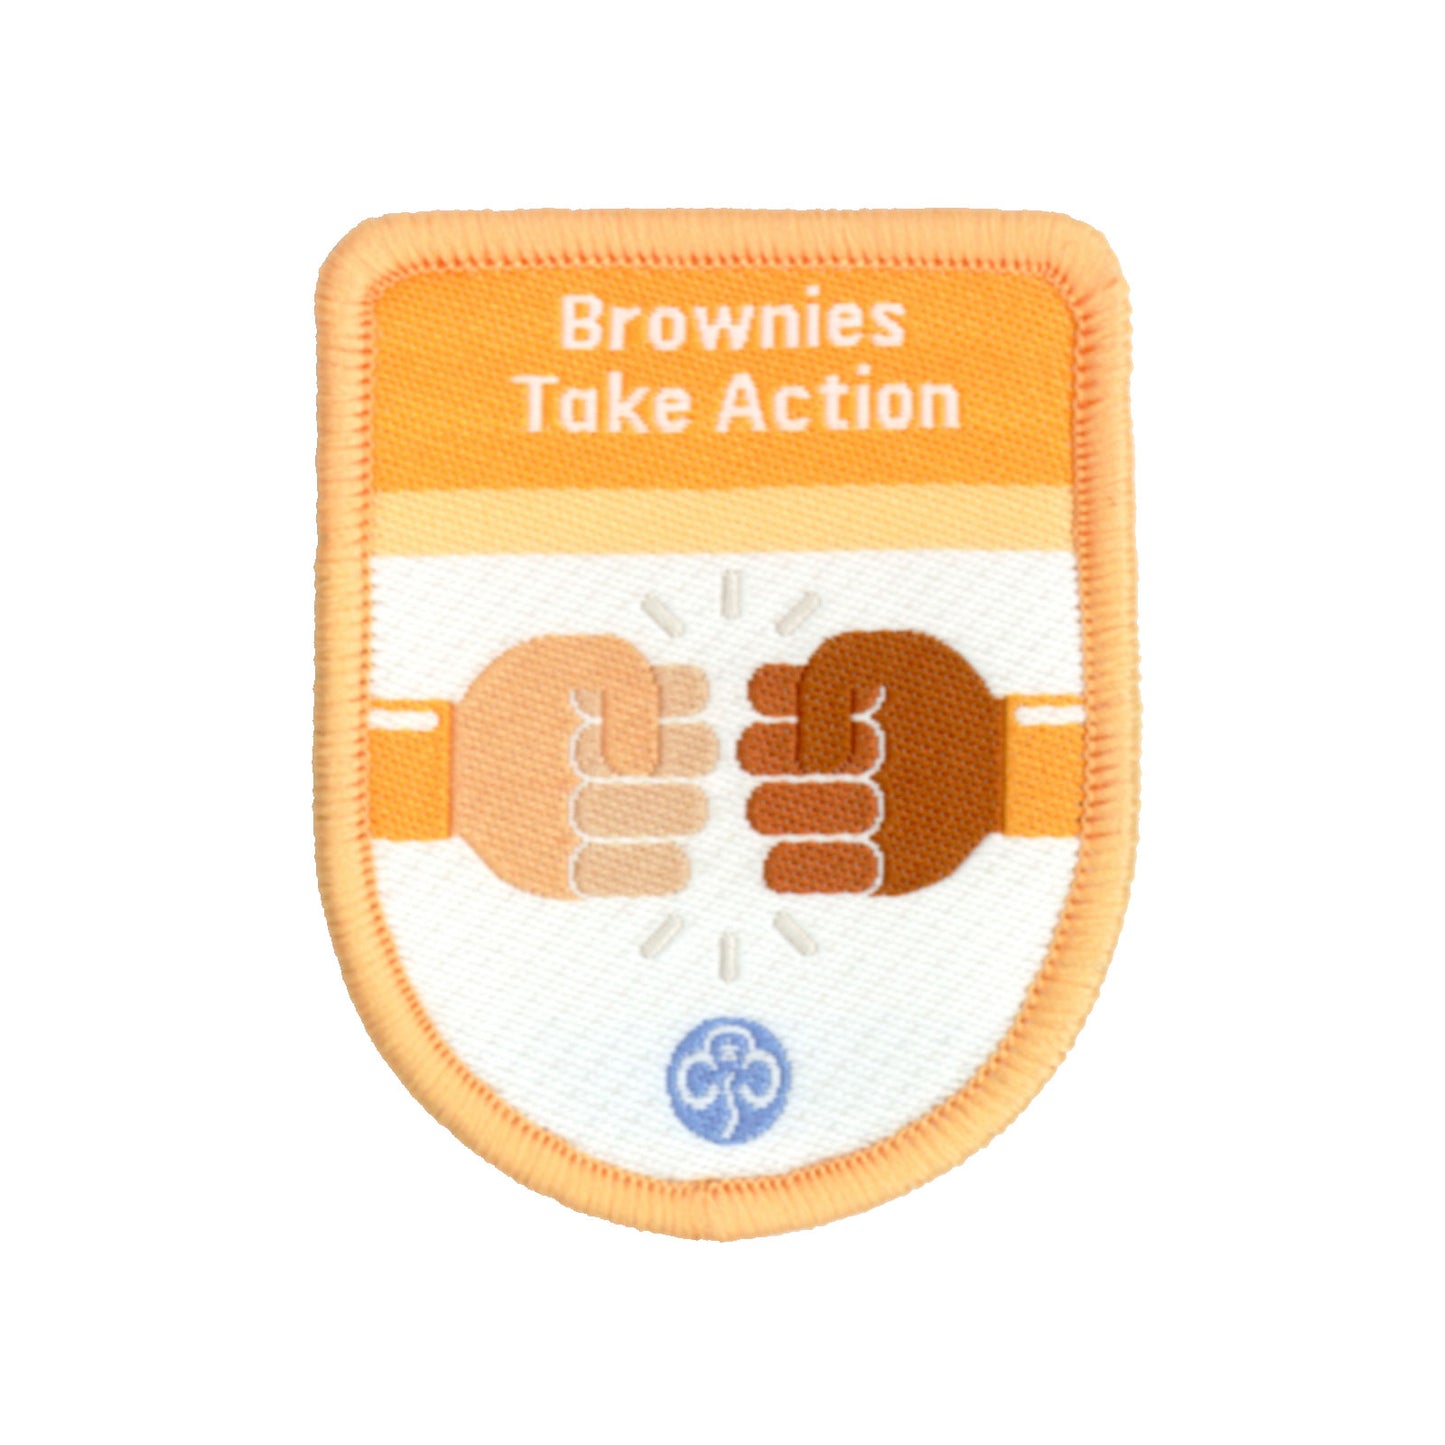 Brownies Take Action Theme Award Woven Badge